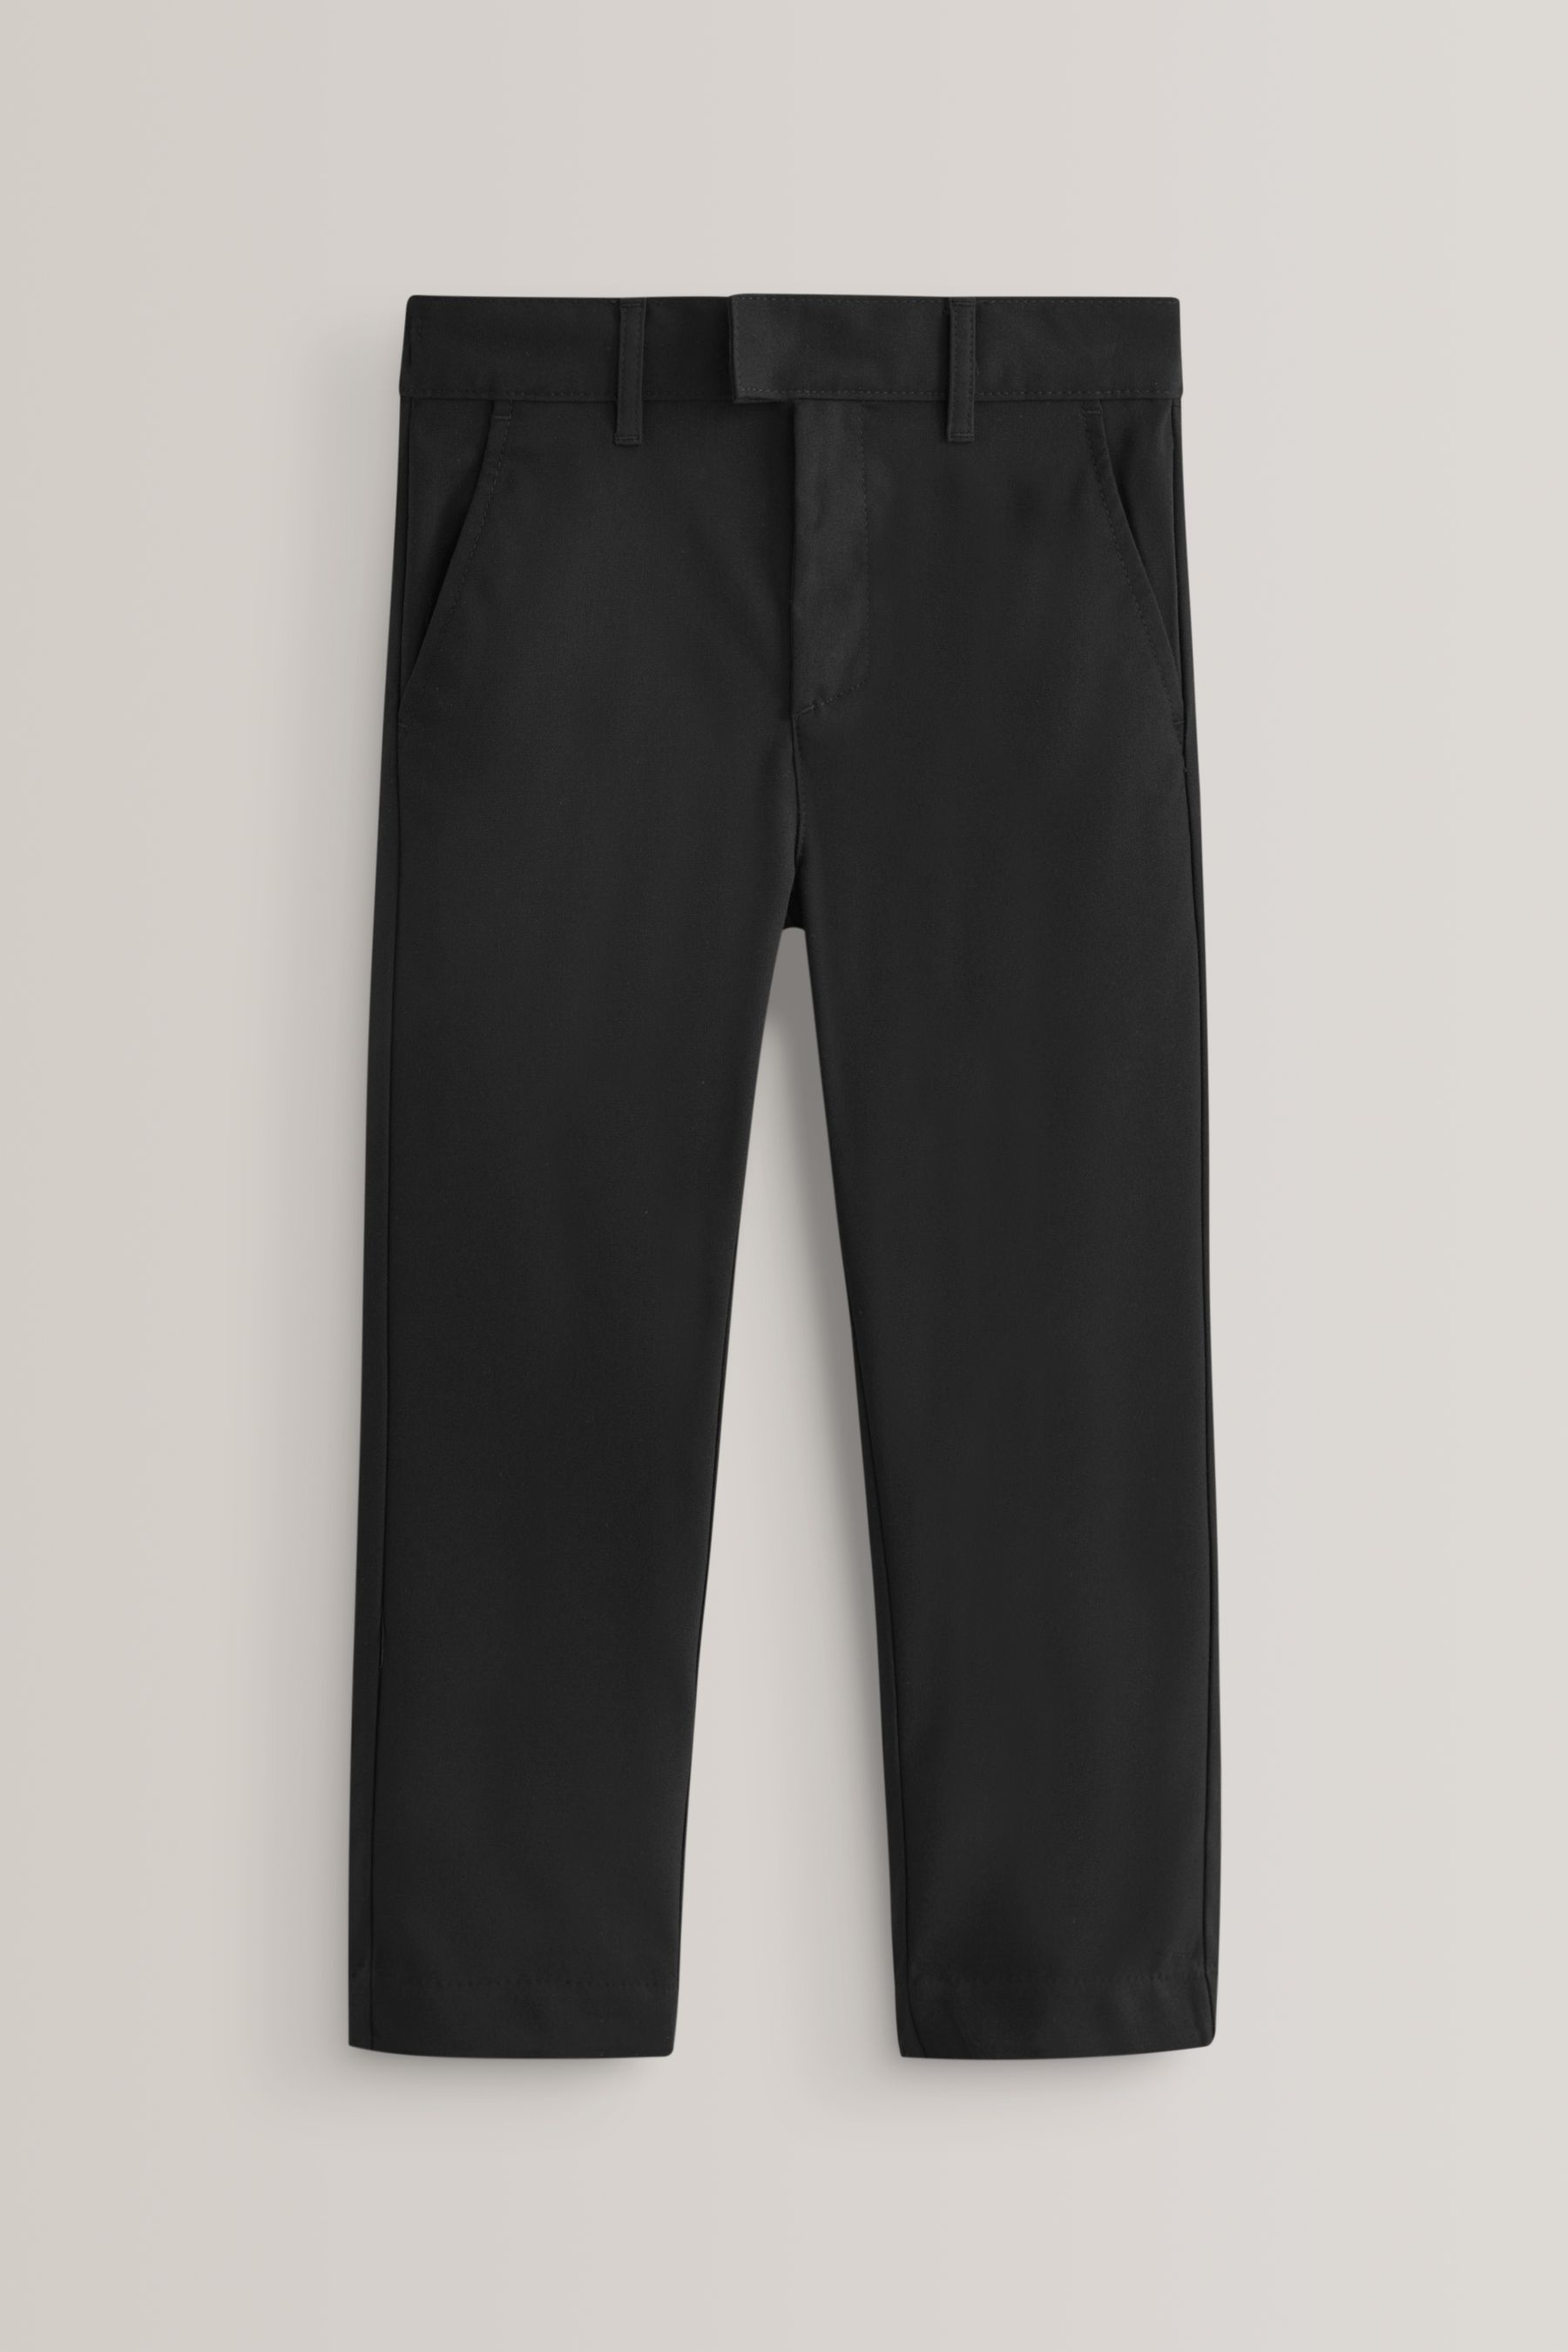 Buy Black Plus Waist School Formal Stretch Skinny Trousers (3-17yrs ...